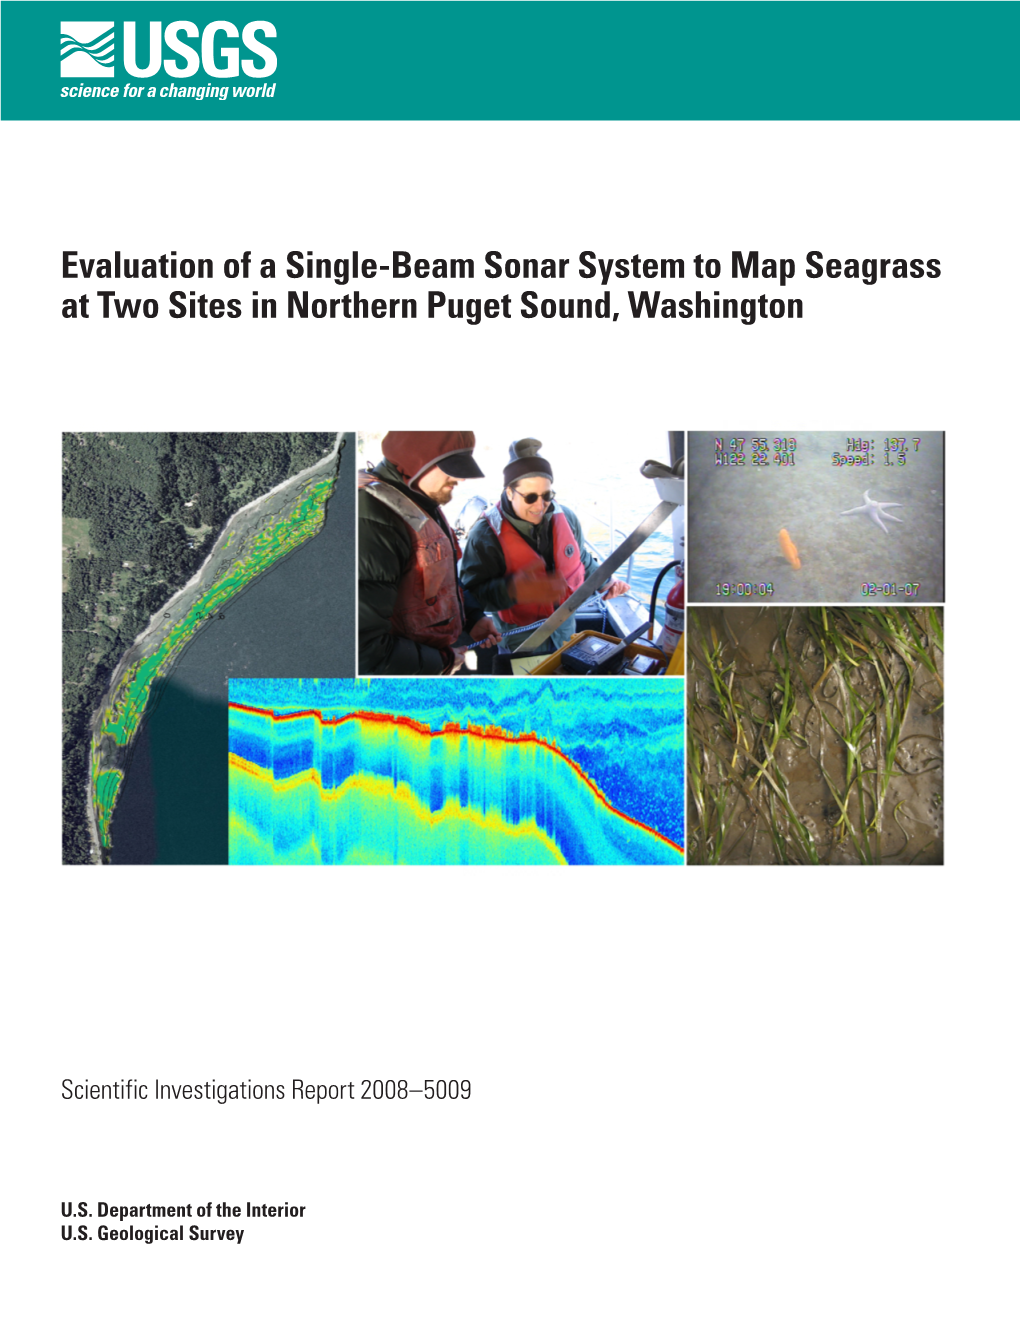 U.S Geological Survey Scientific Investigations Report 2008-5009